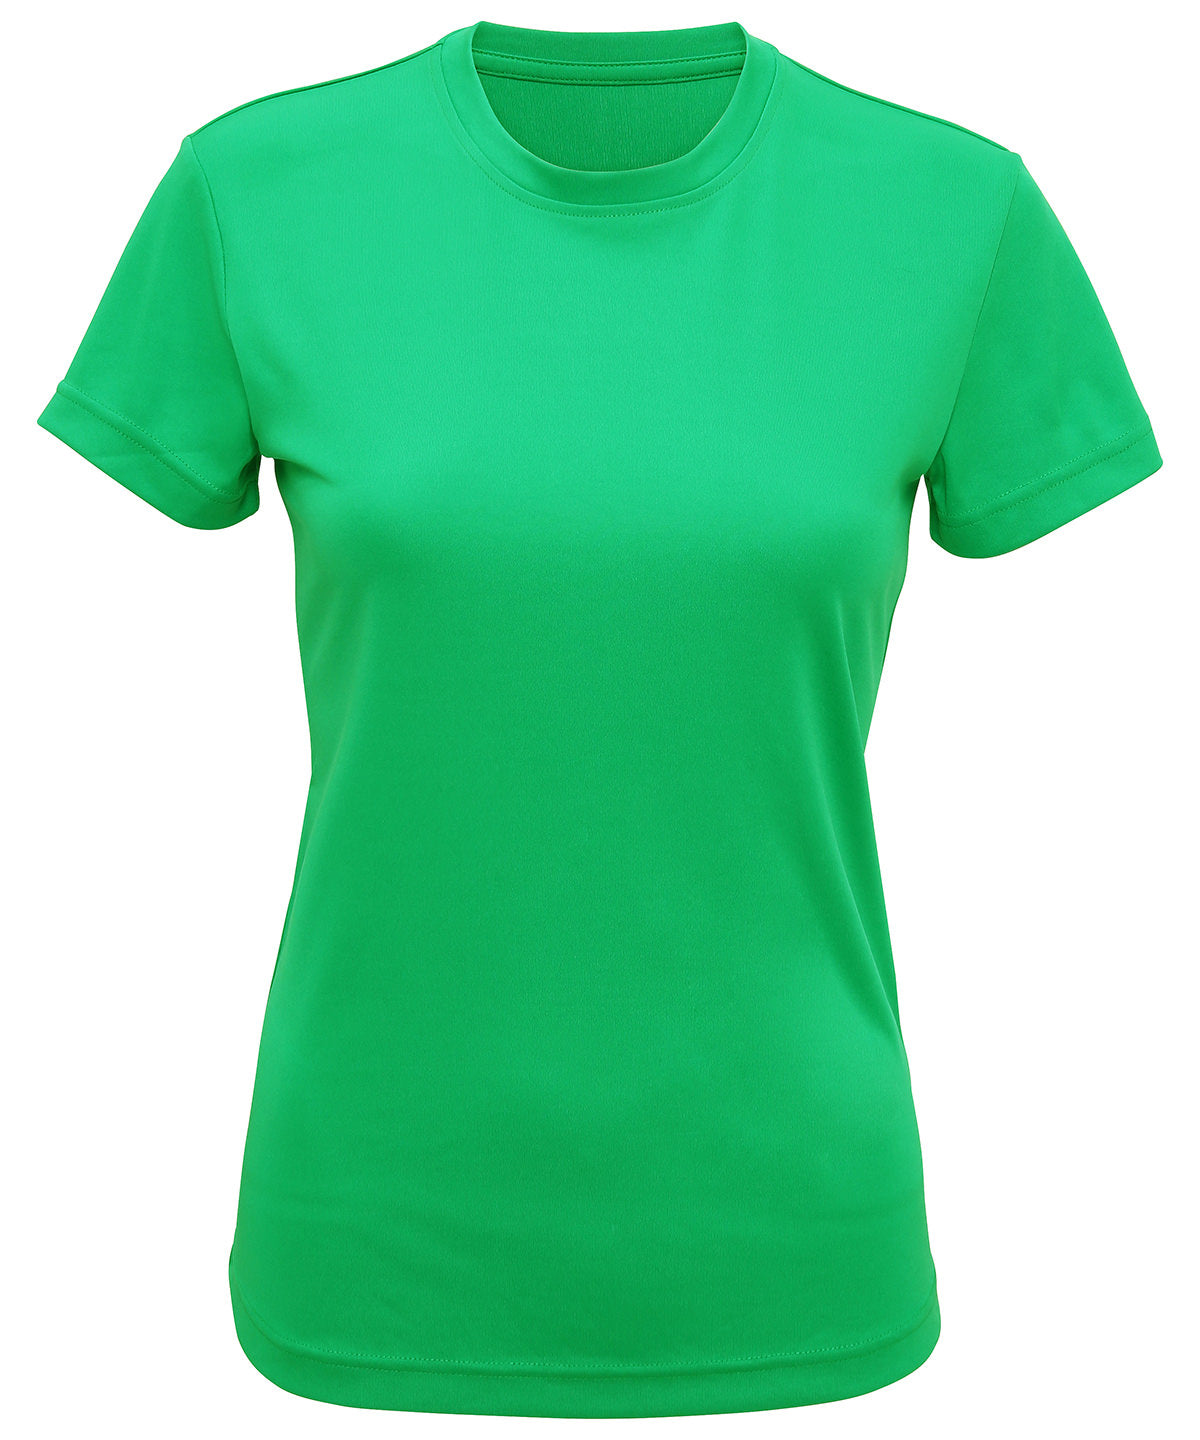 Stuttermabolir - Women's TriDri® Performance T-shirt